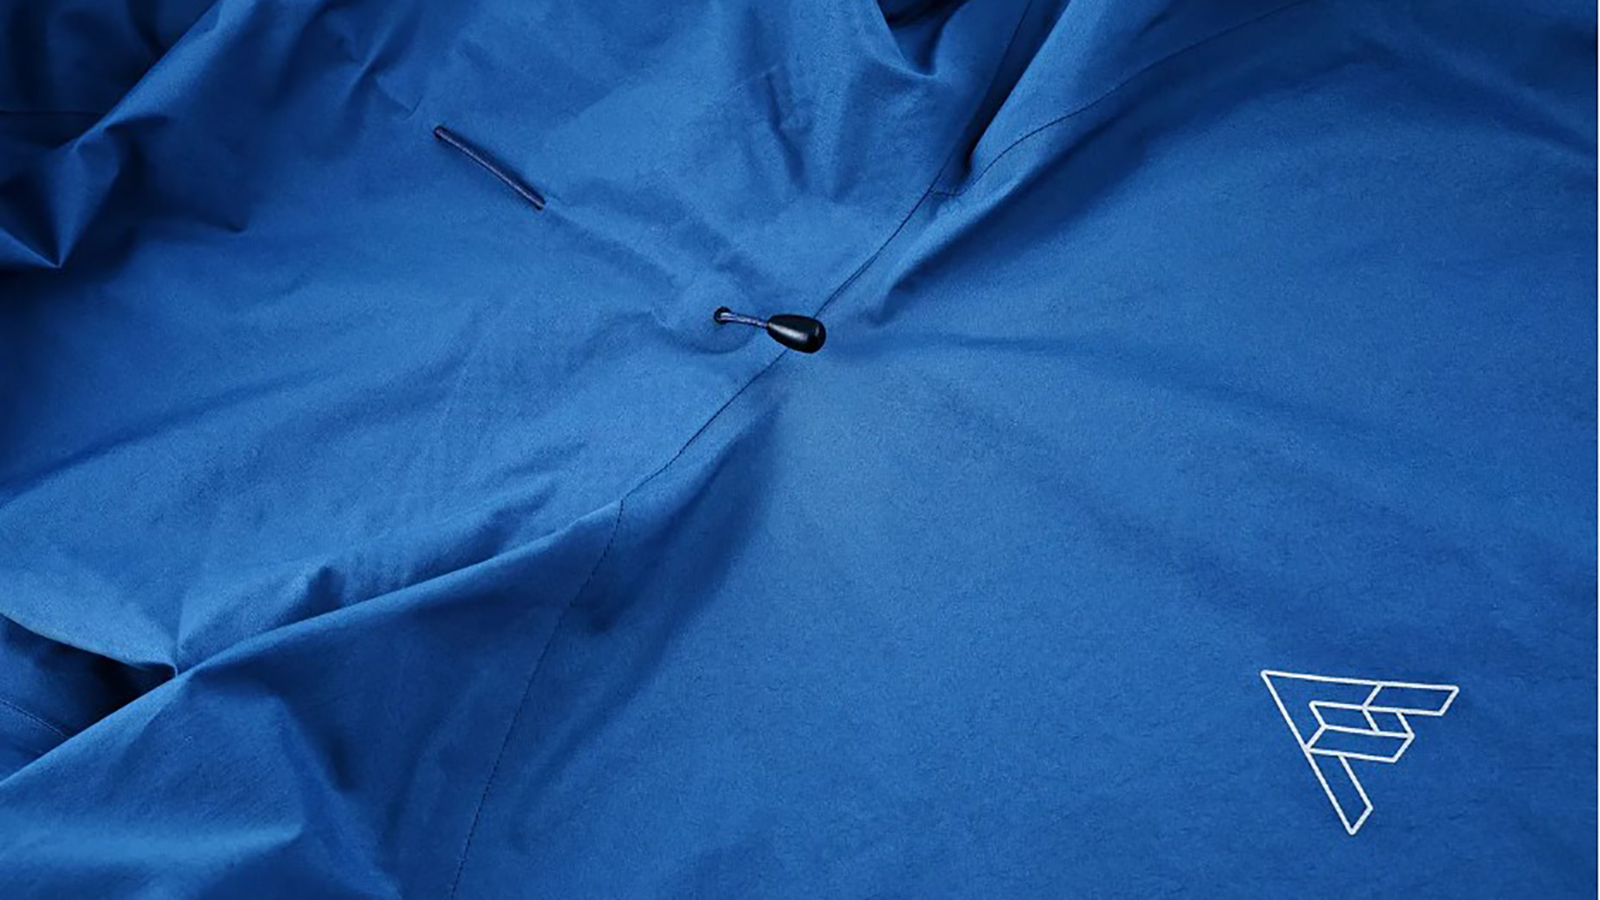 A close up of the 7mesh Copilot rain jacket